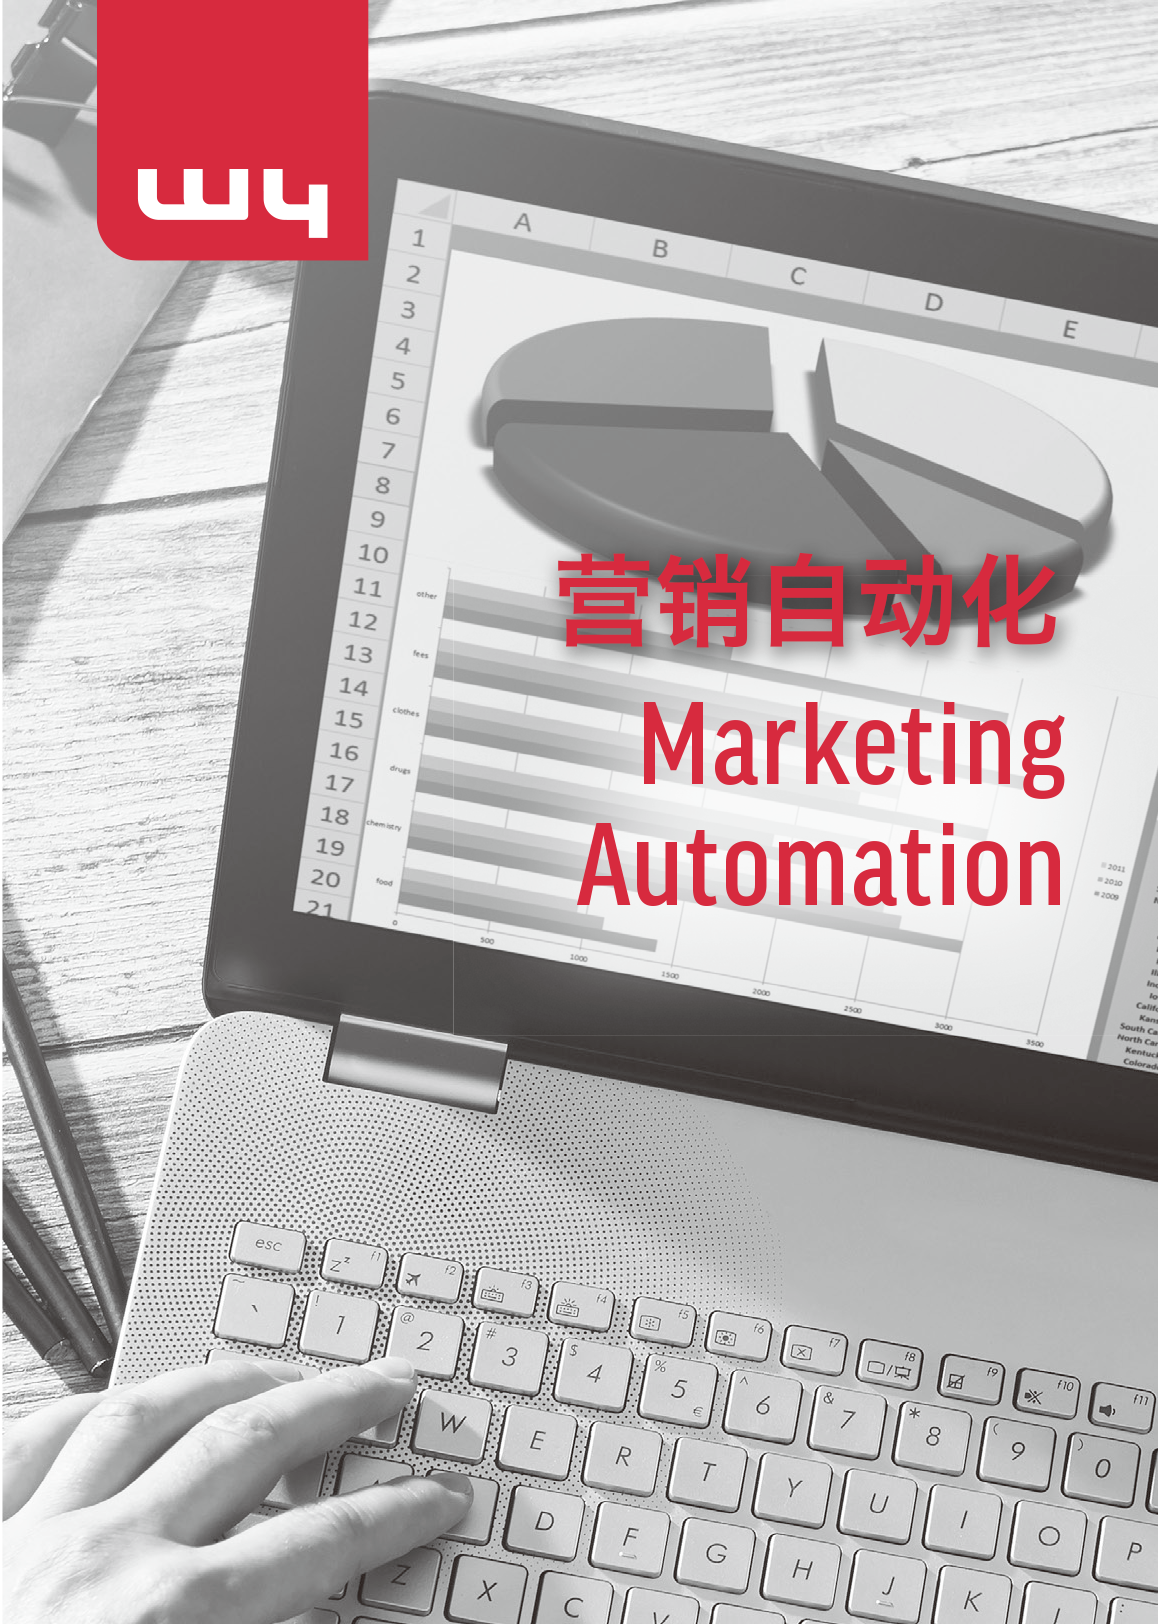 W4_Flyer_Marketing_Automation_crop